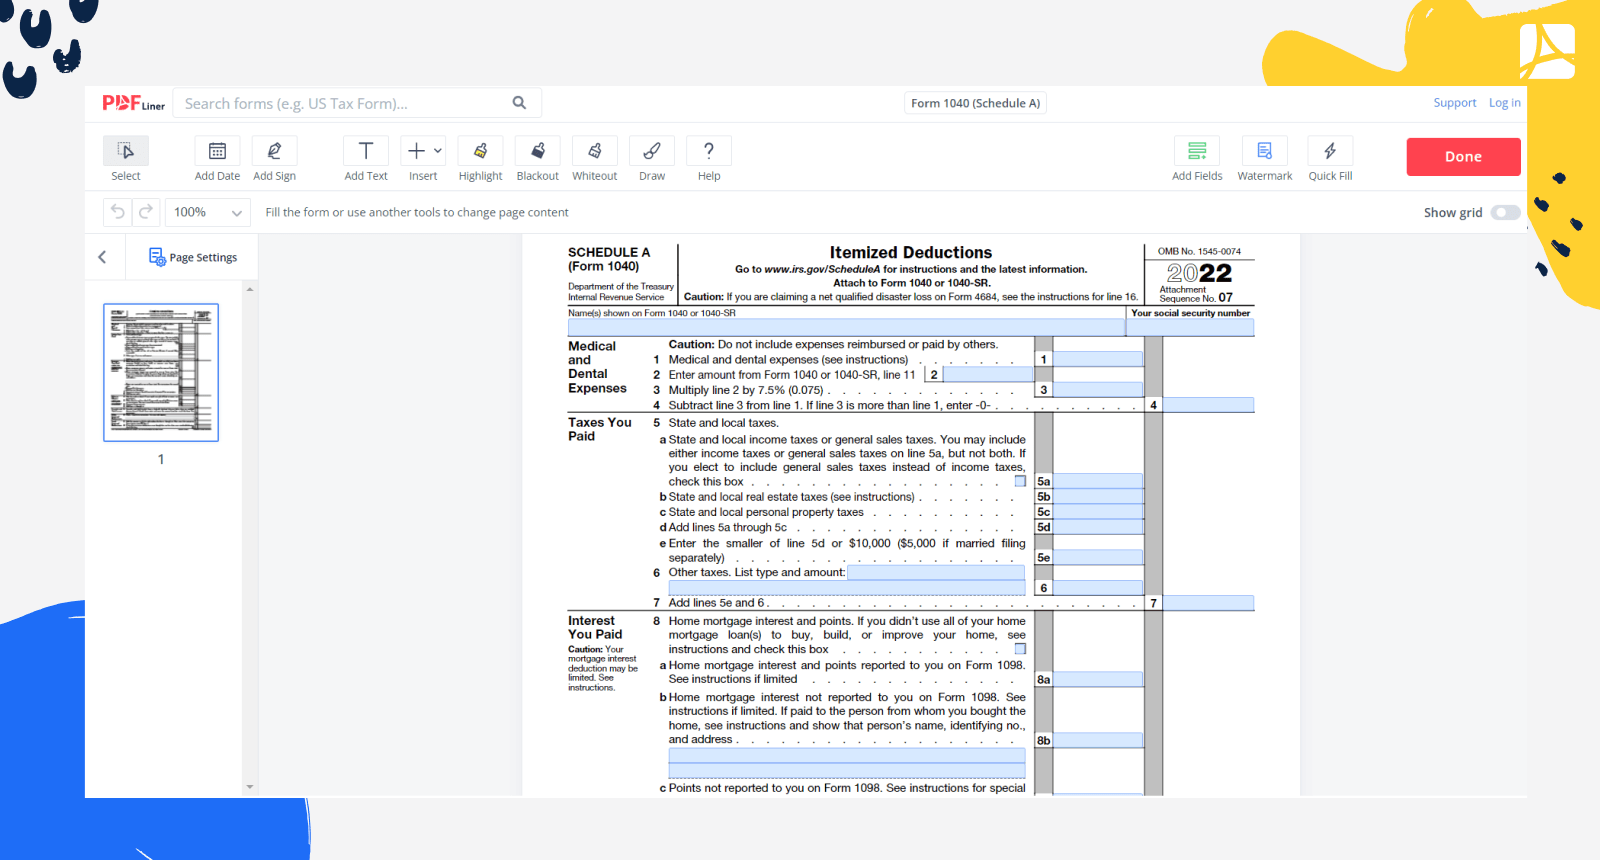 Form 1040 (Schedule A) Screenshot